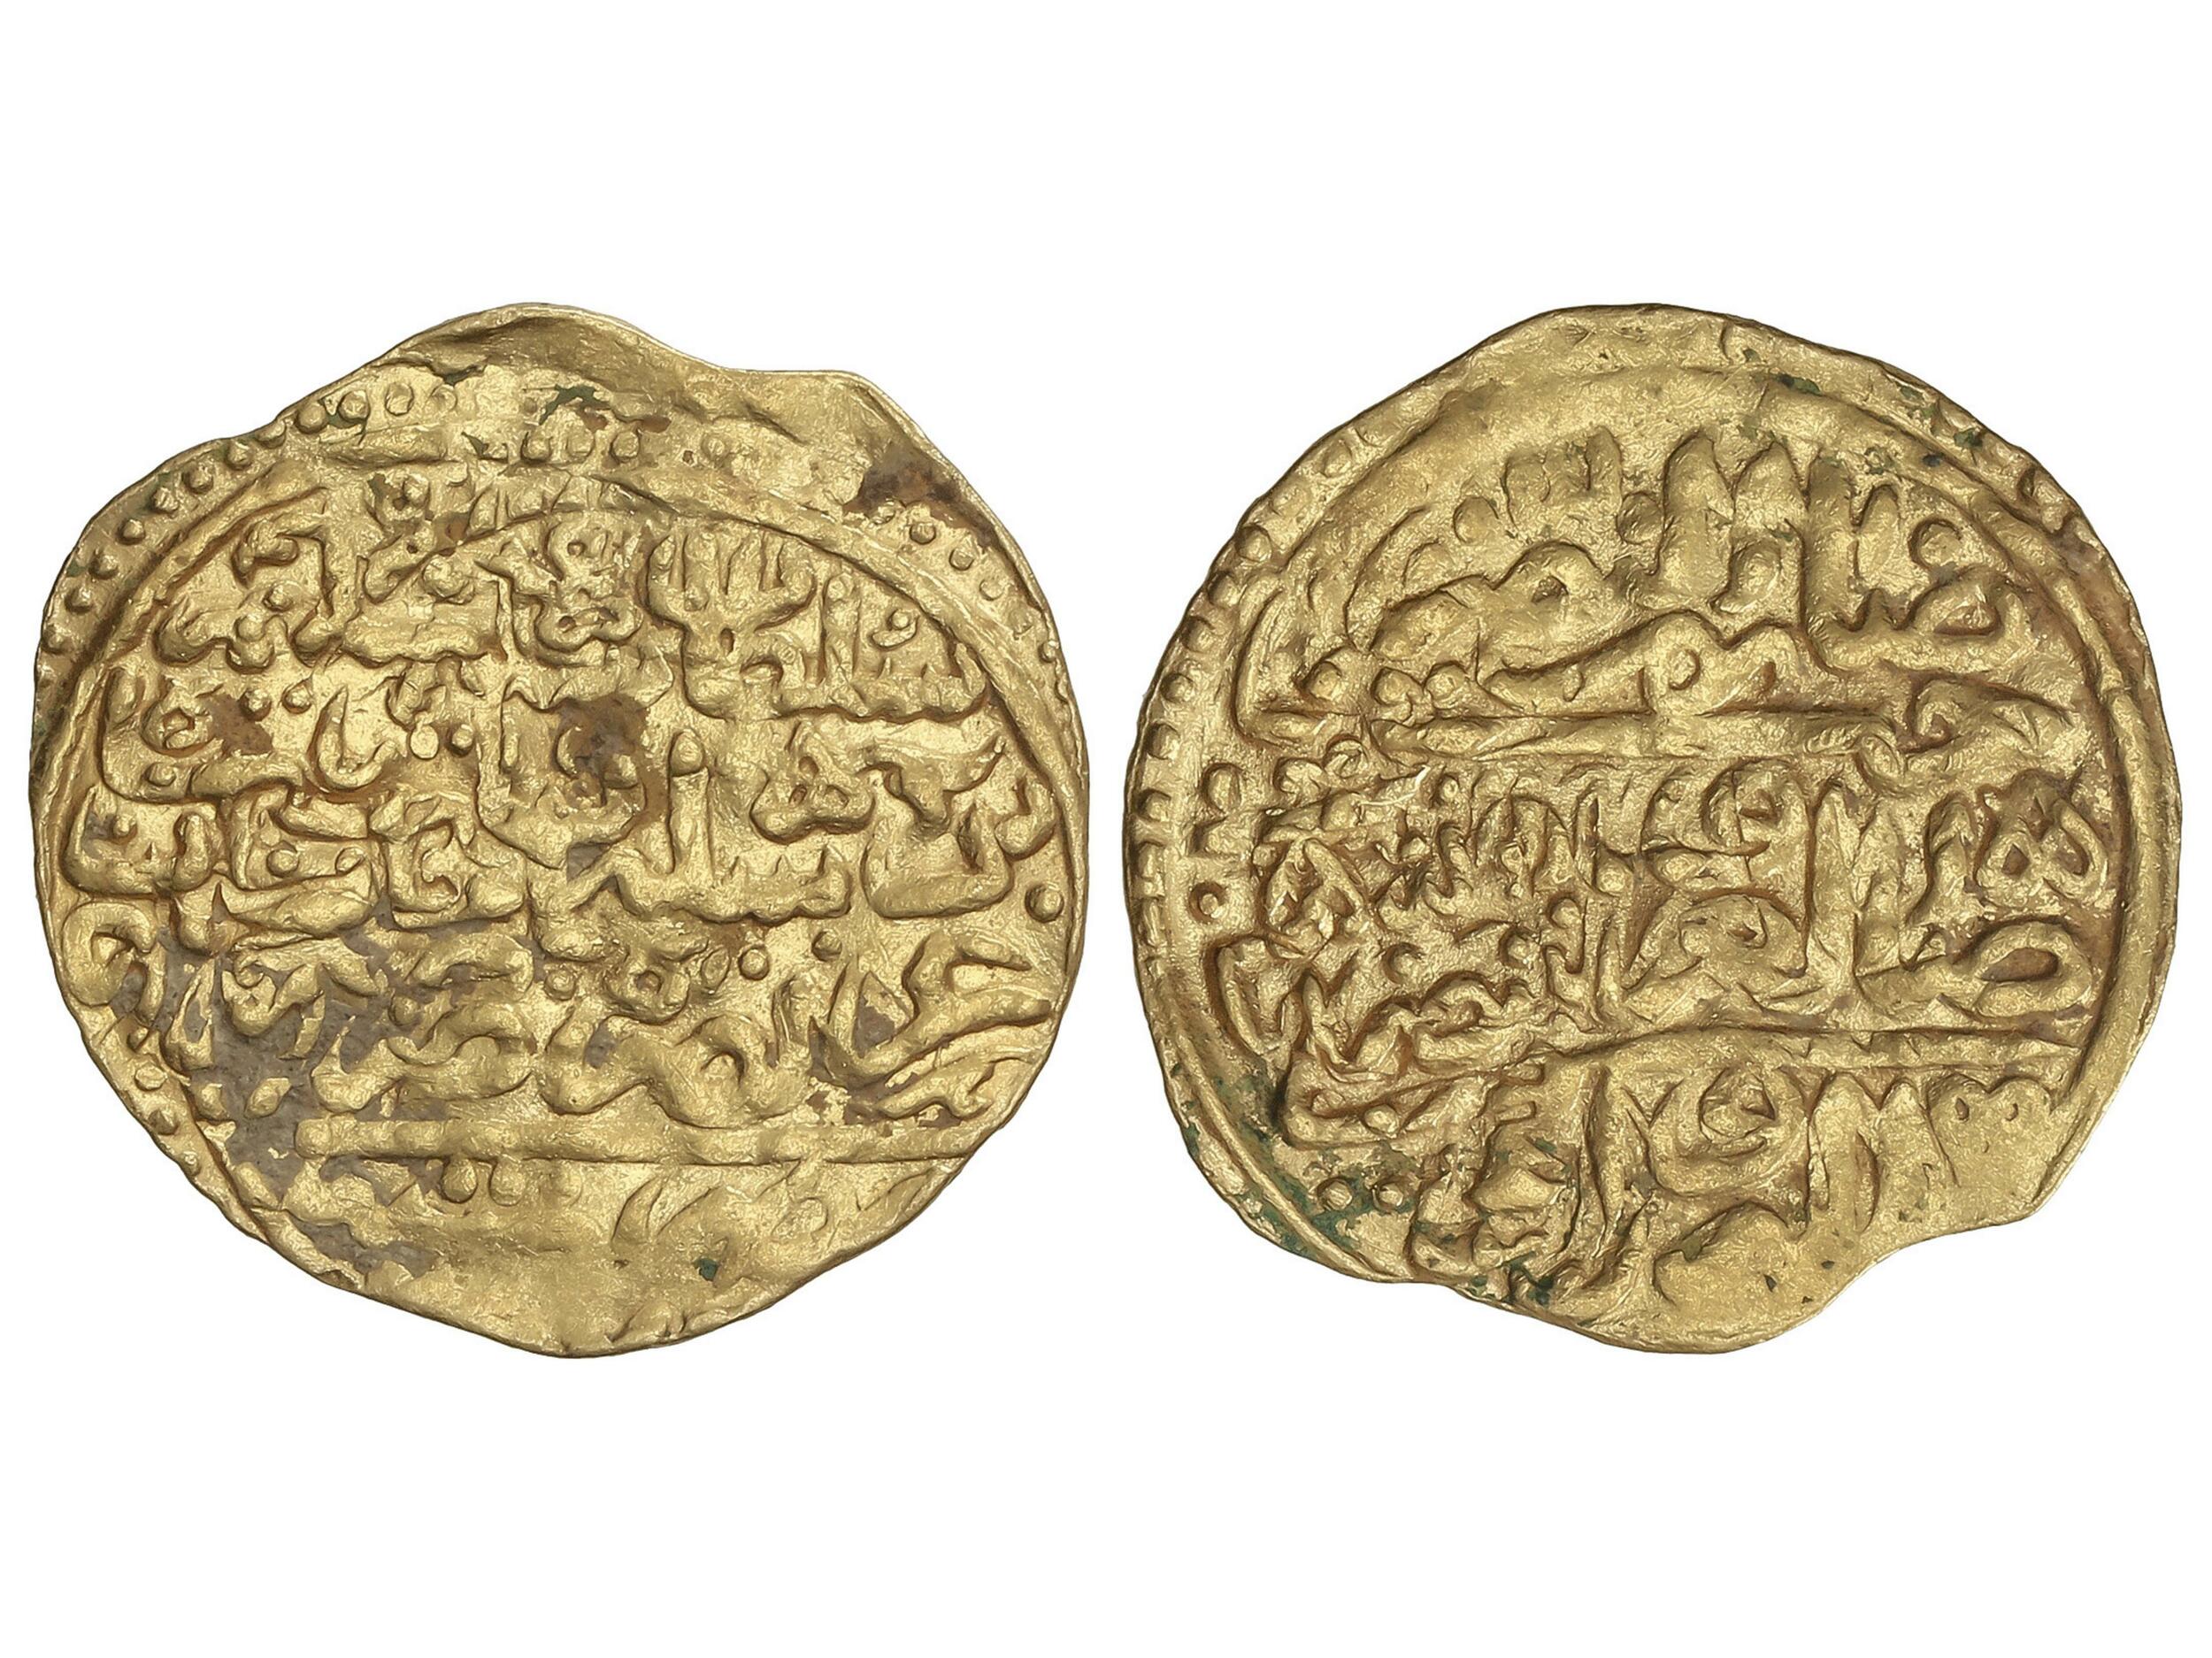 30.220: Islamic Coins - Ottoman